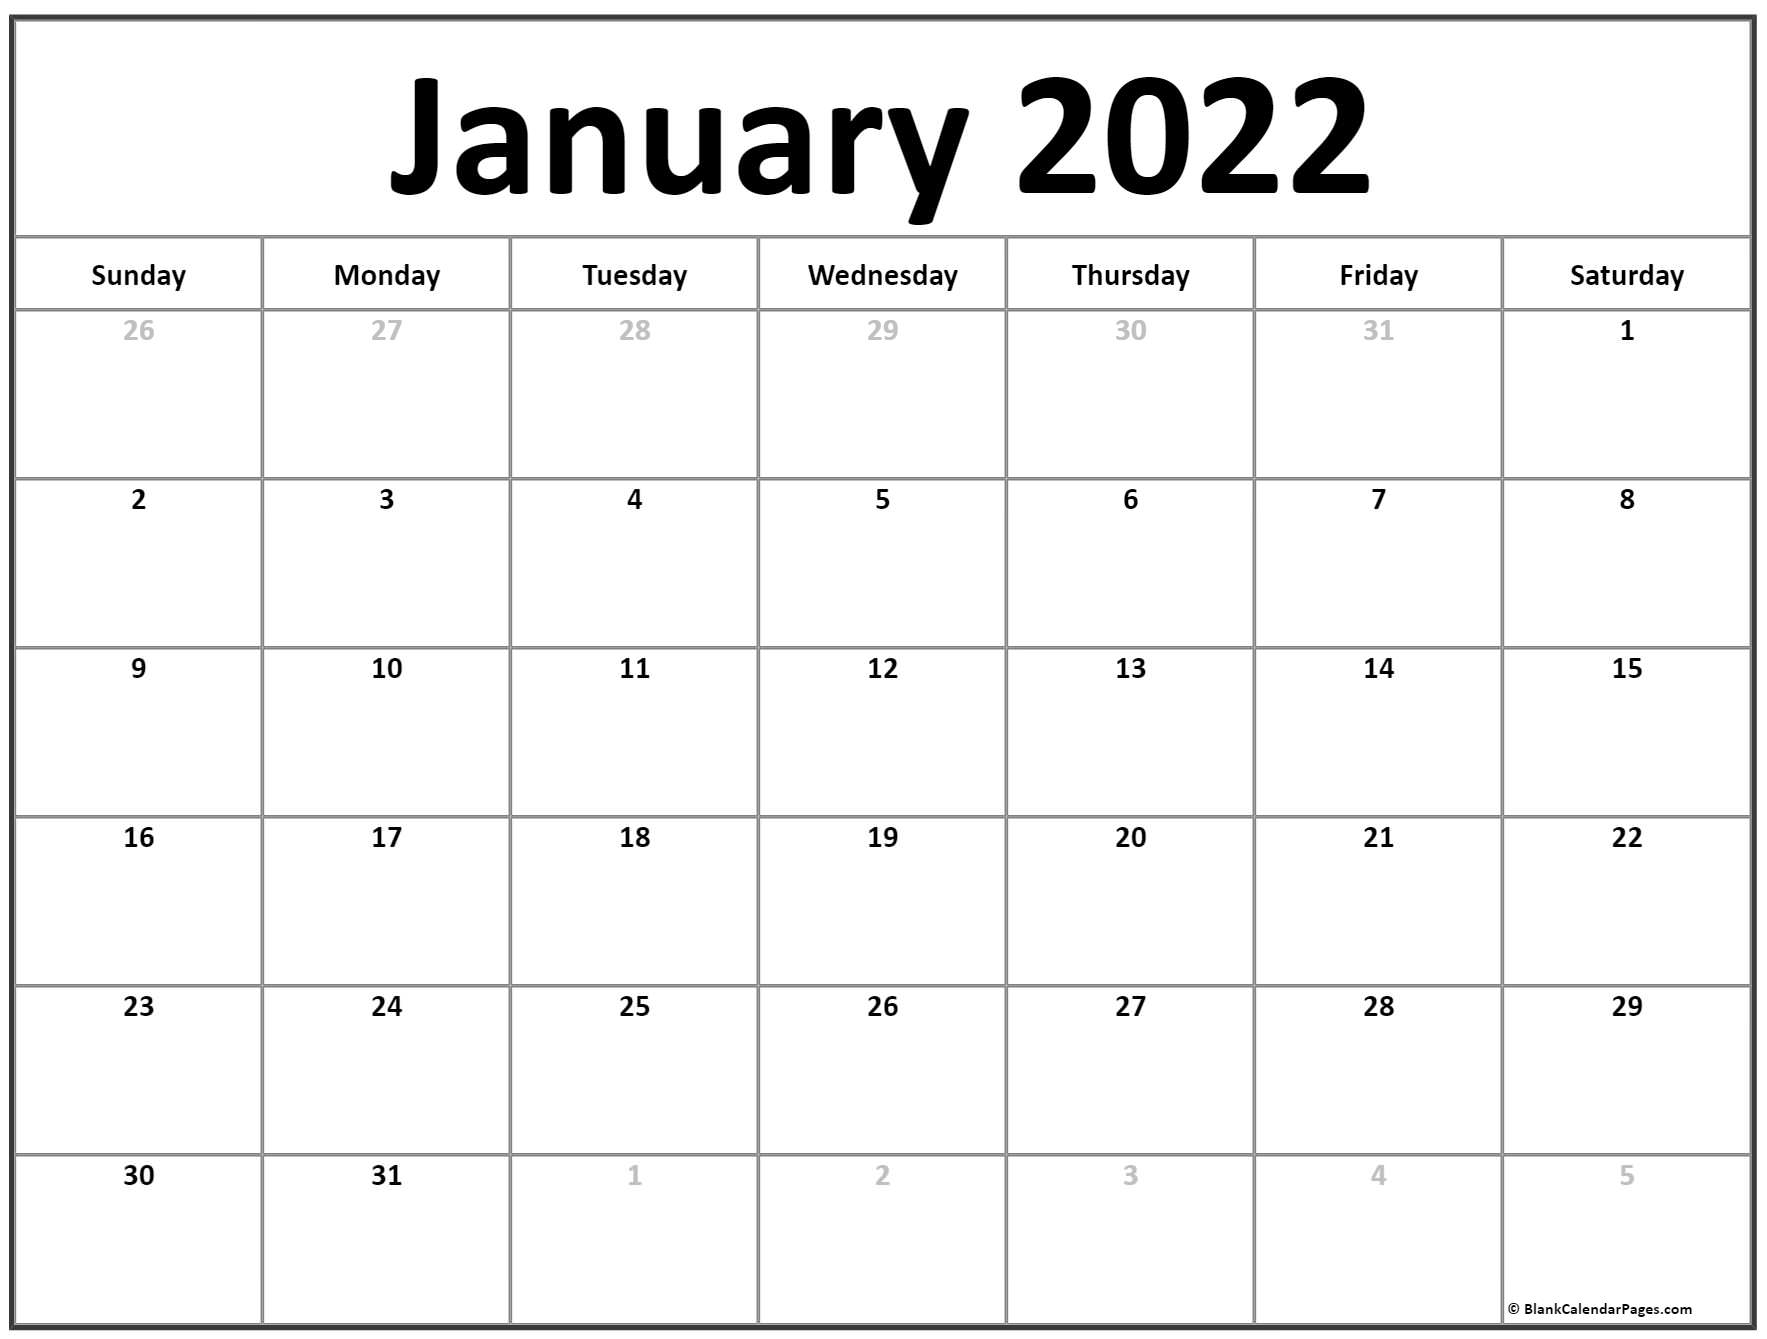 Get January 2022 Calendar Events